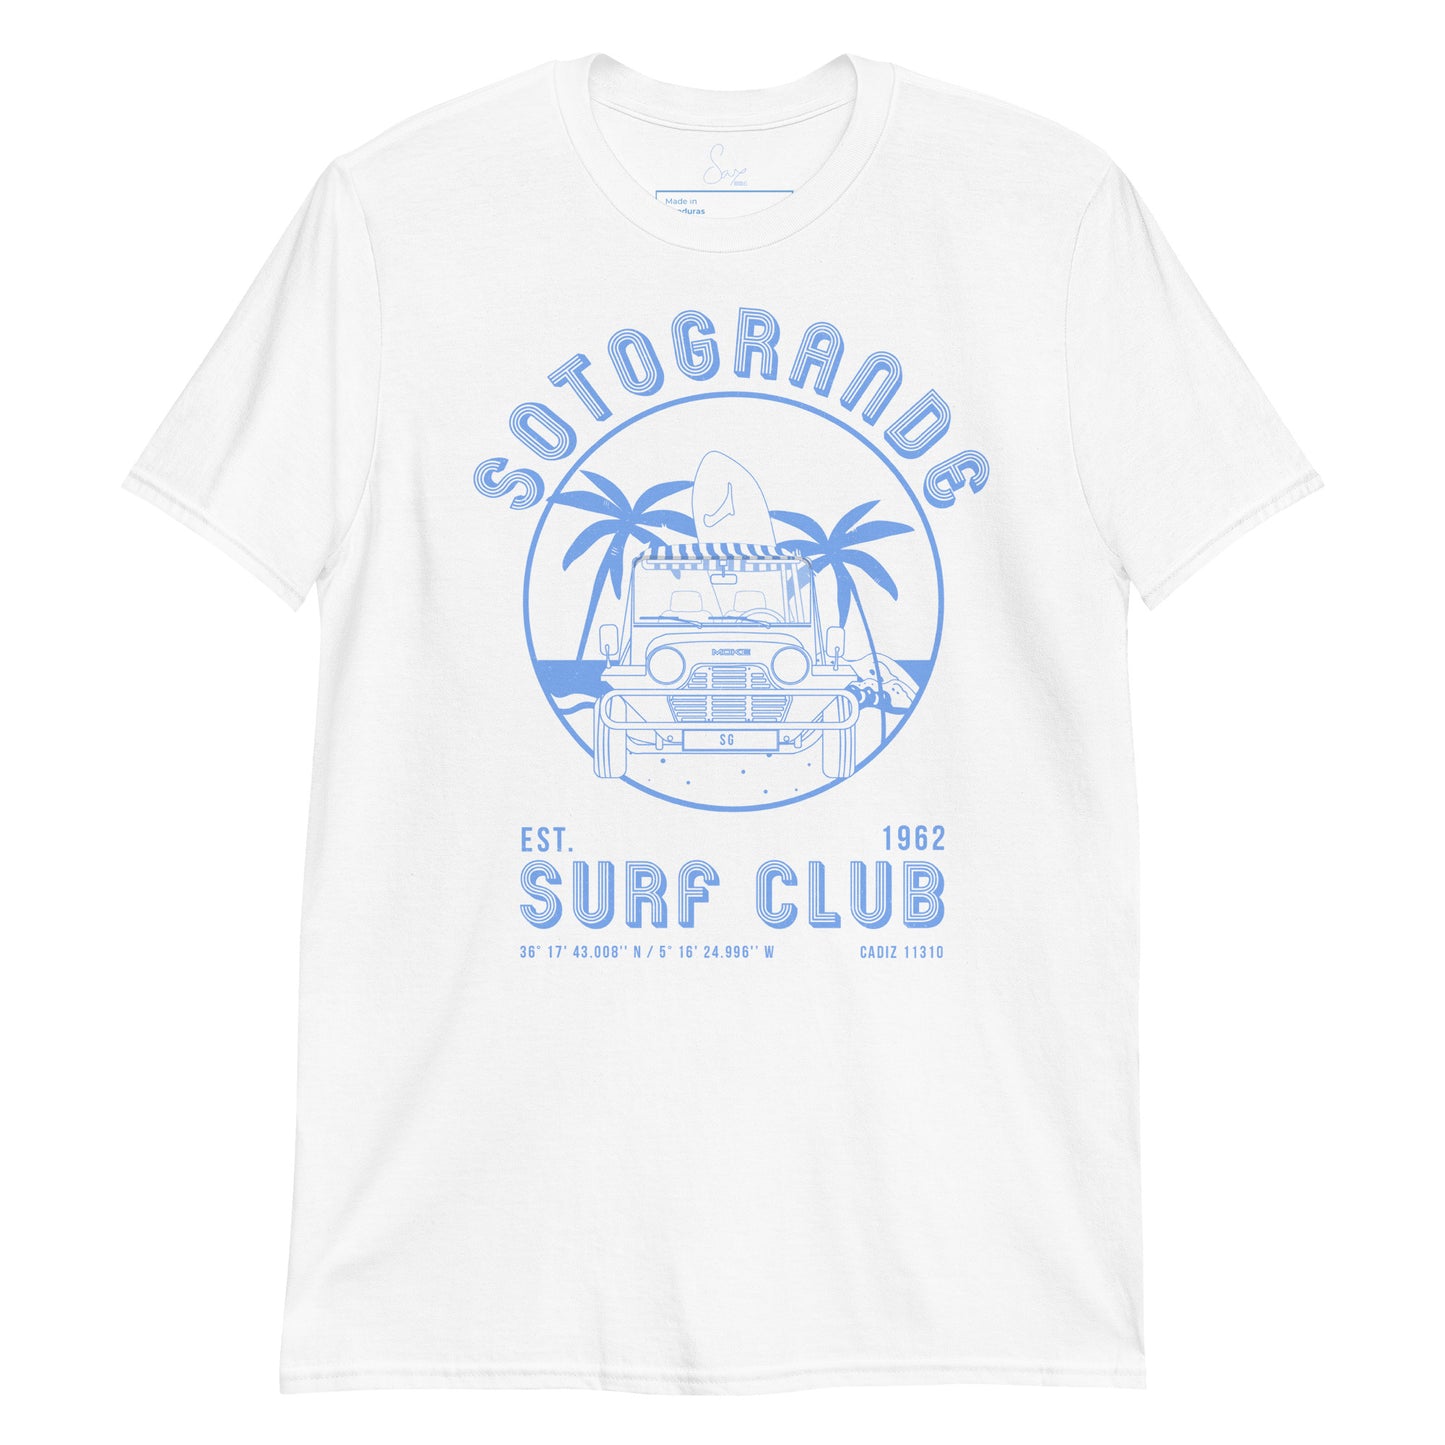 Sotogrande Surf Club - Blue